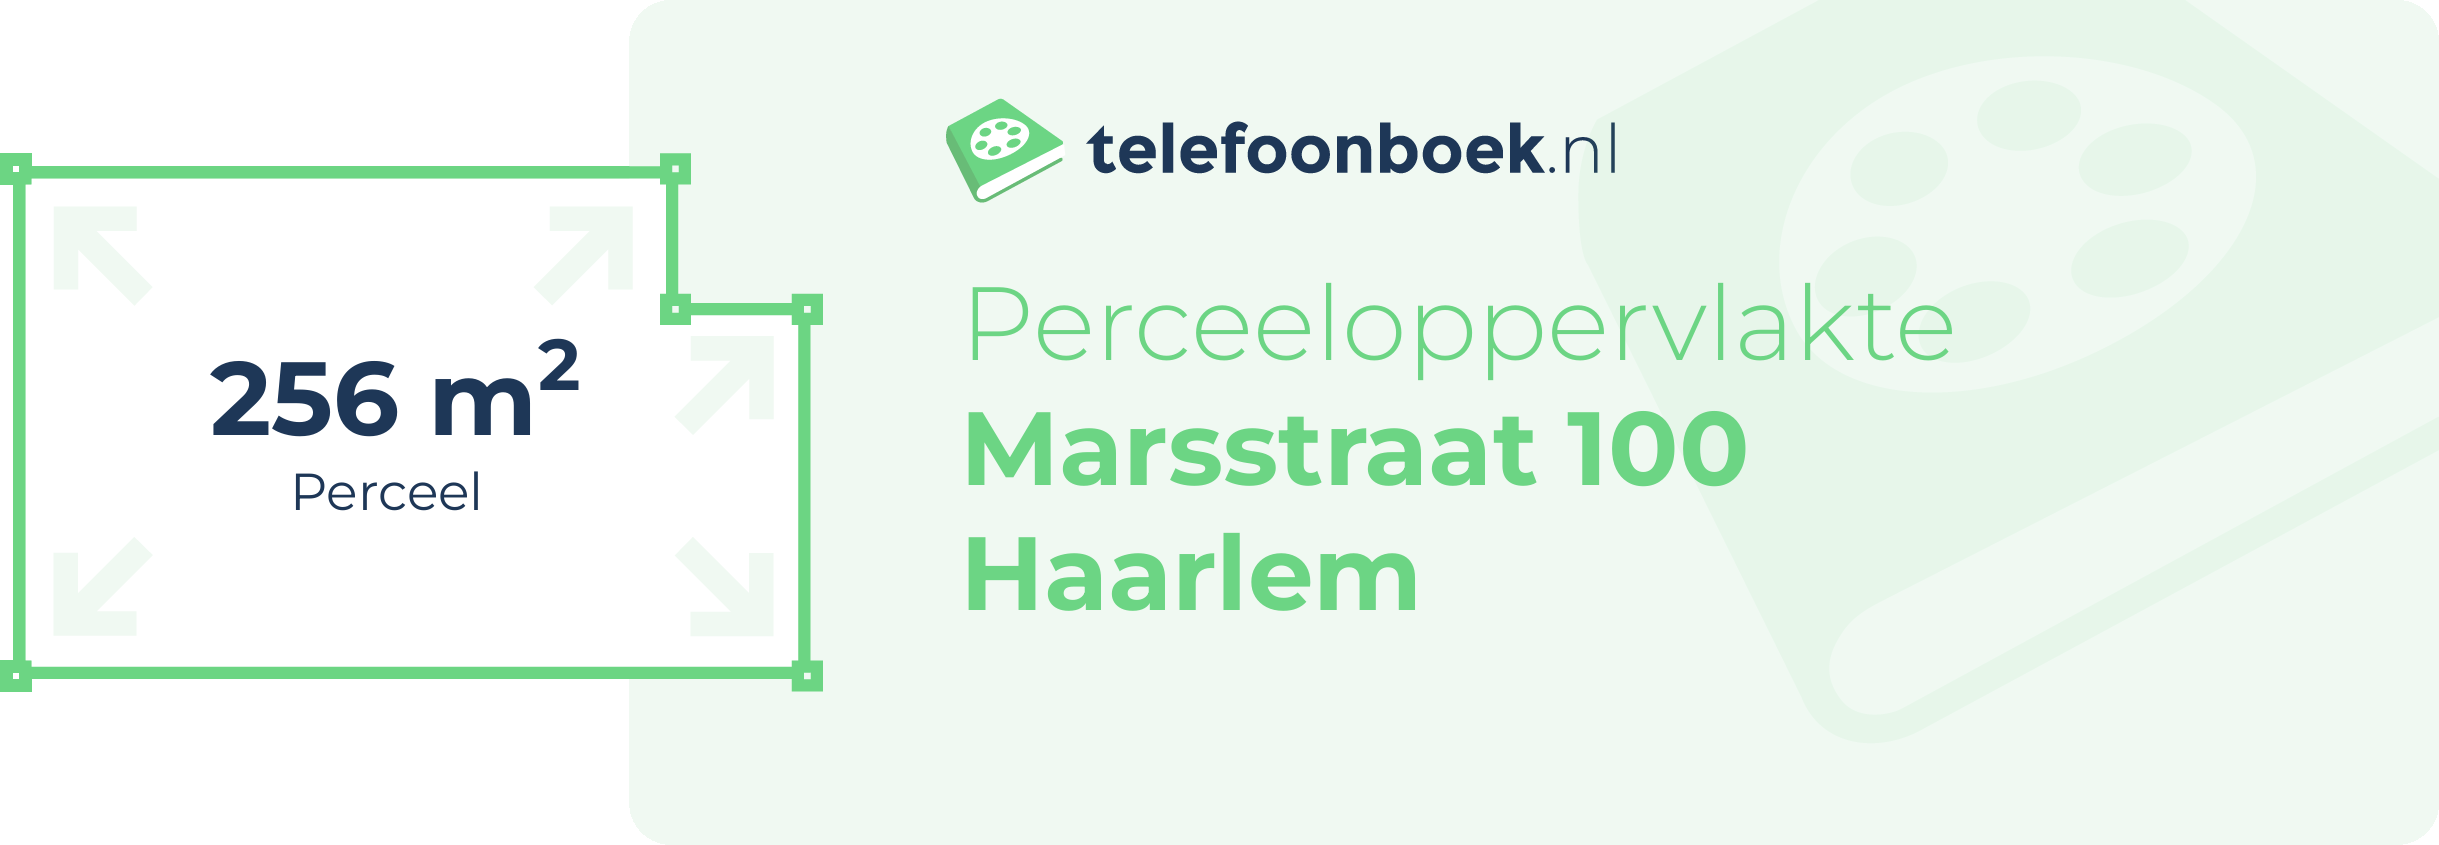 Perceeloppervlakte Marsstraat 100 Haarlem